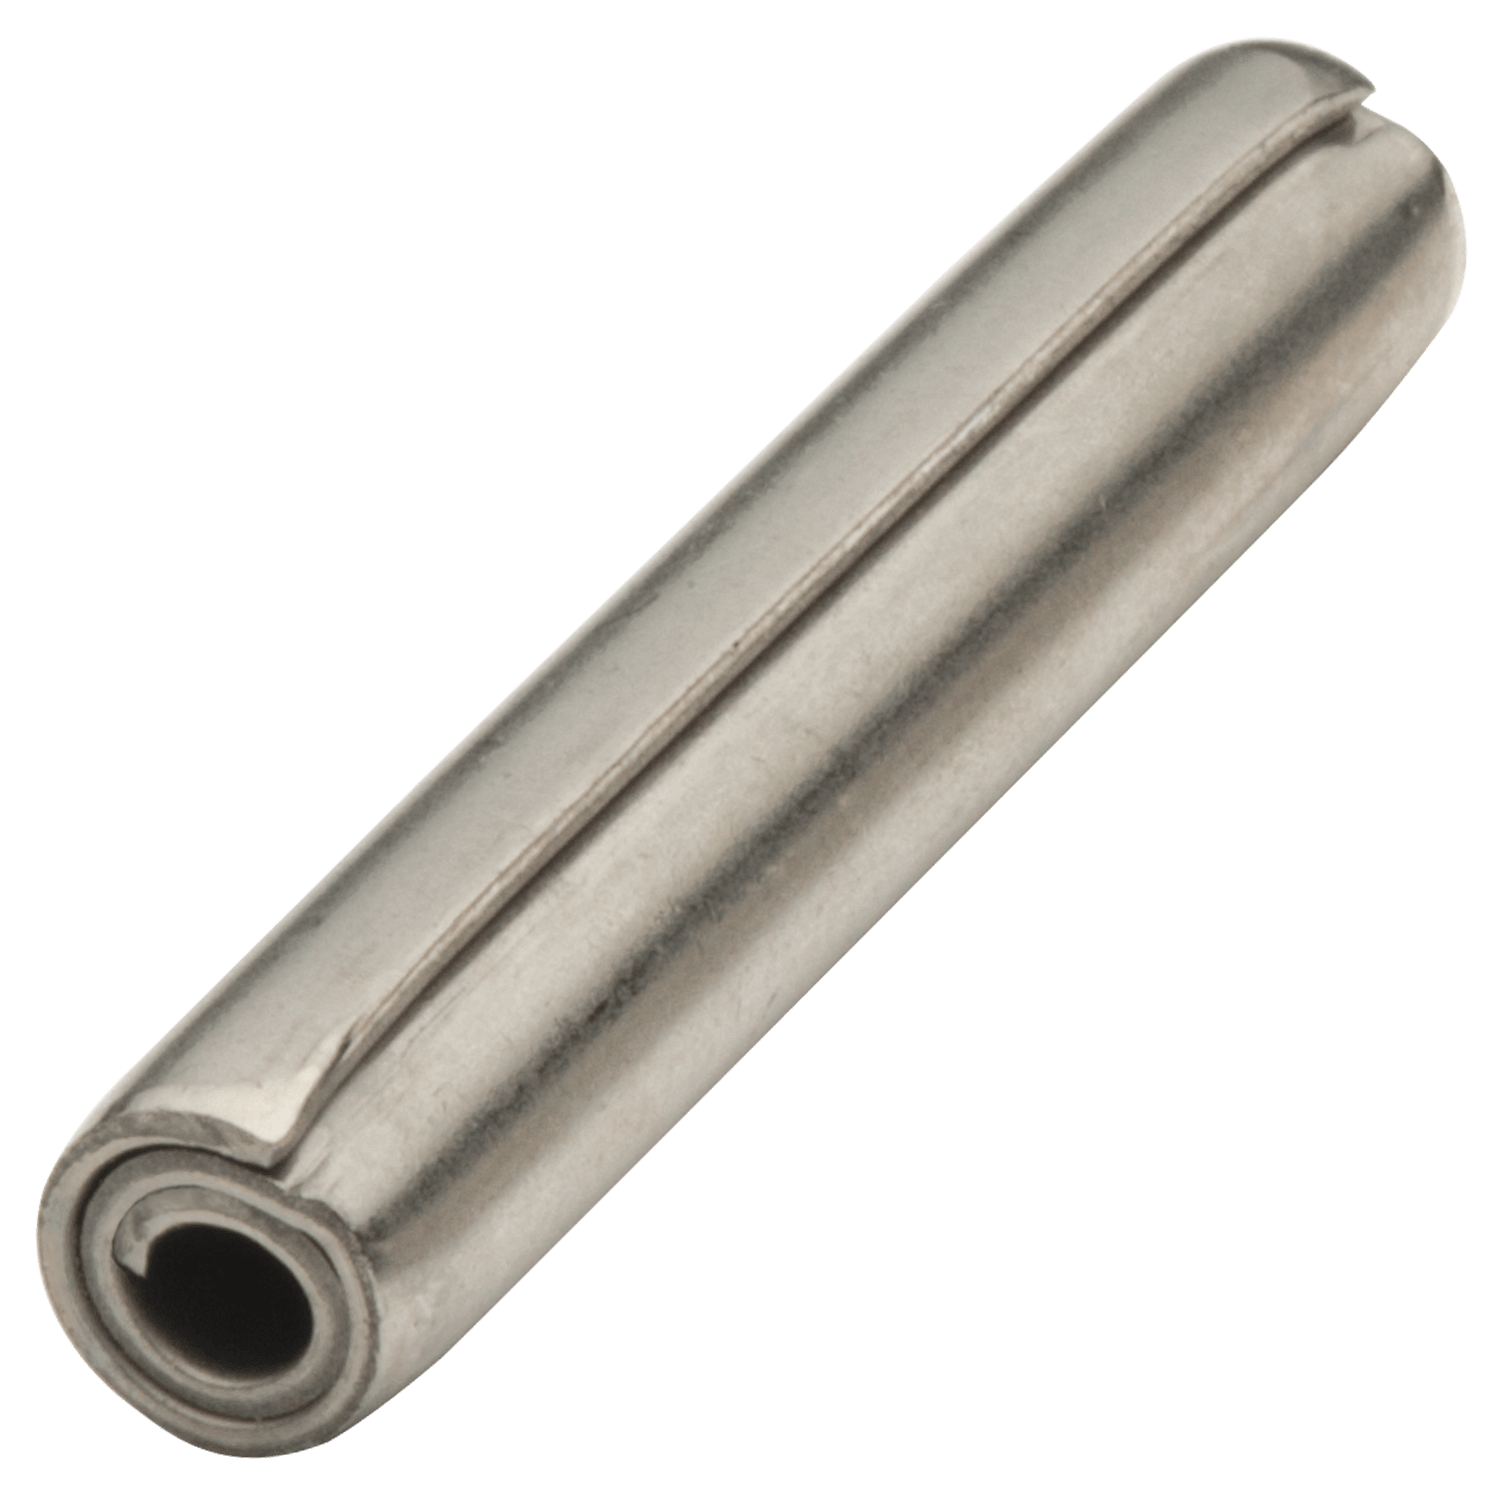 Spring Pin Medium Carbon Steel Plain Finish 1/8" x 3/4" Roll Pin 